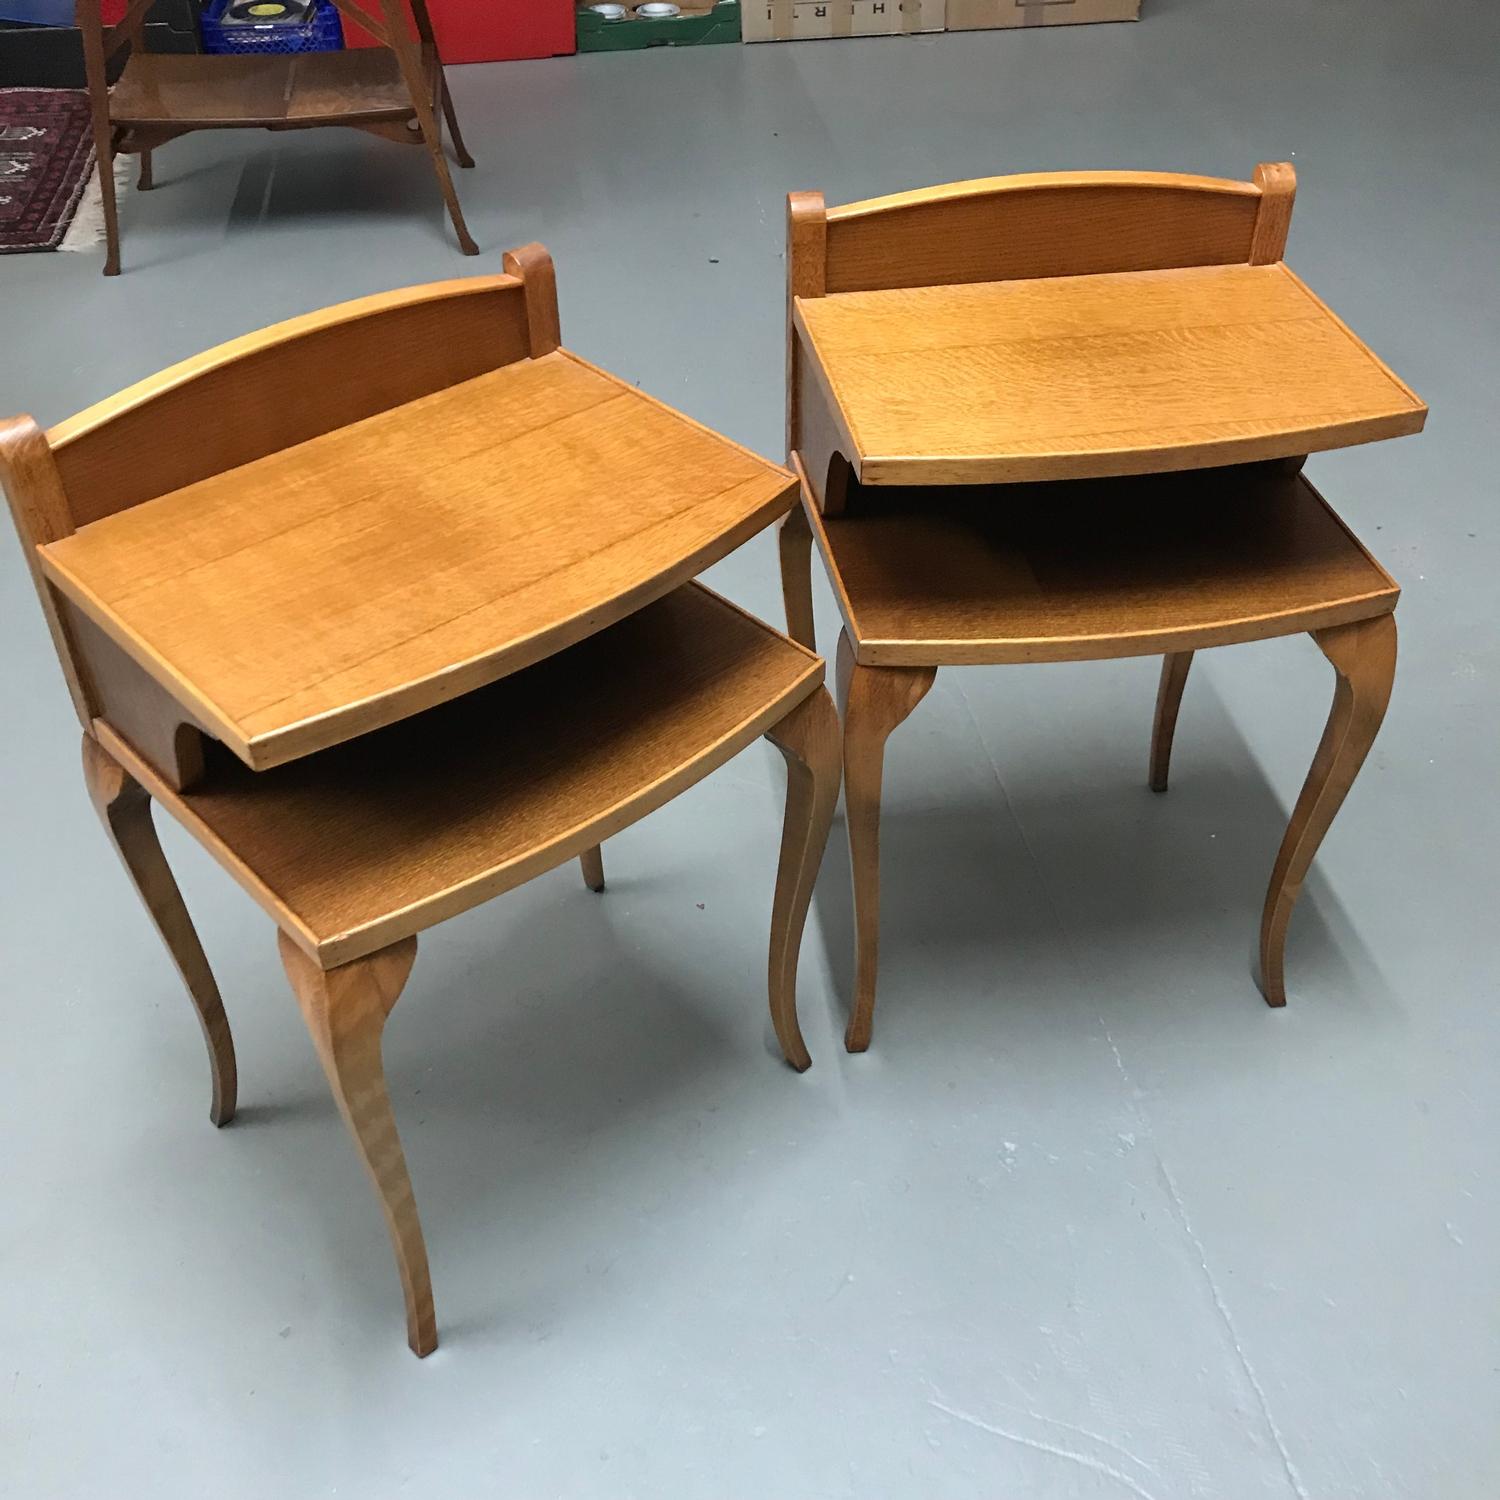 A Pair of Light oak Cabroile leg bed side tables. Measure 70x44x37cm